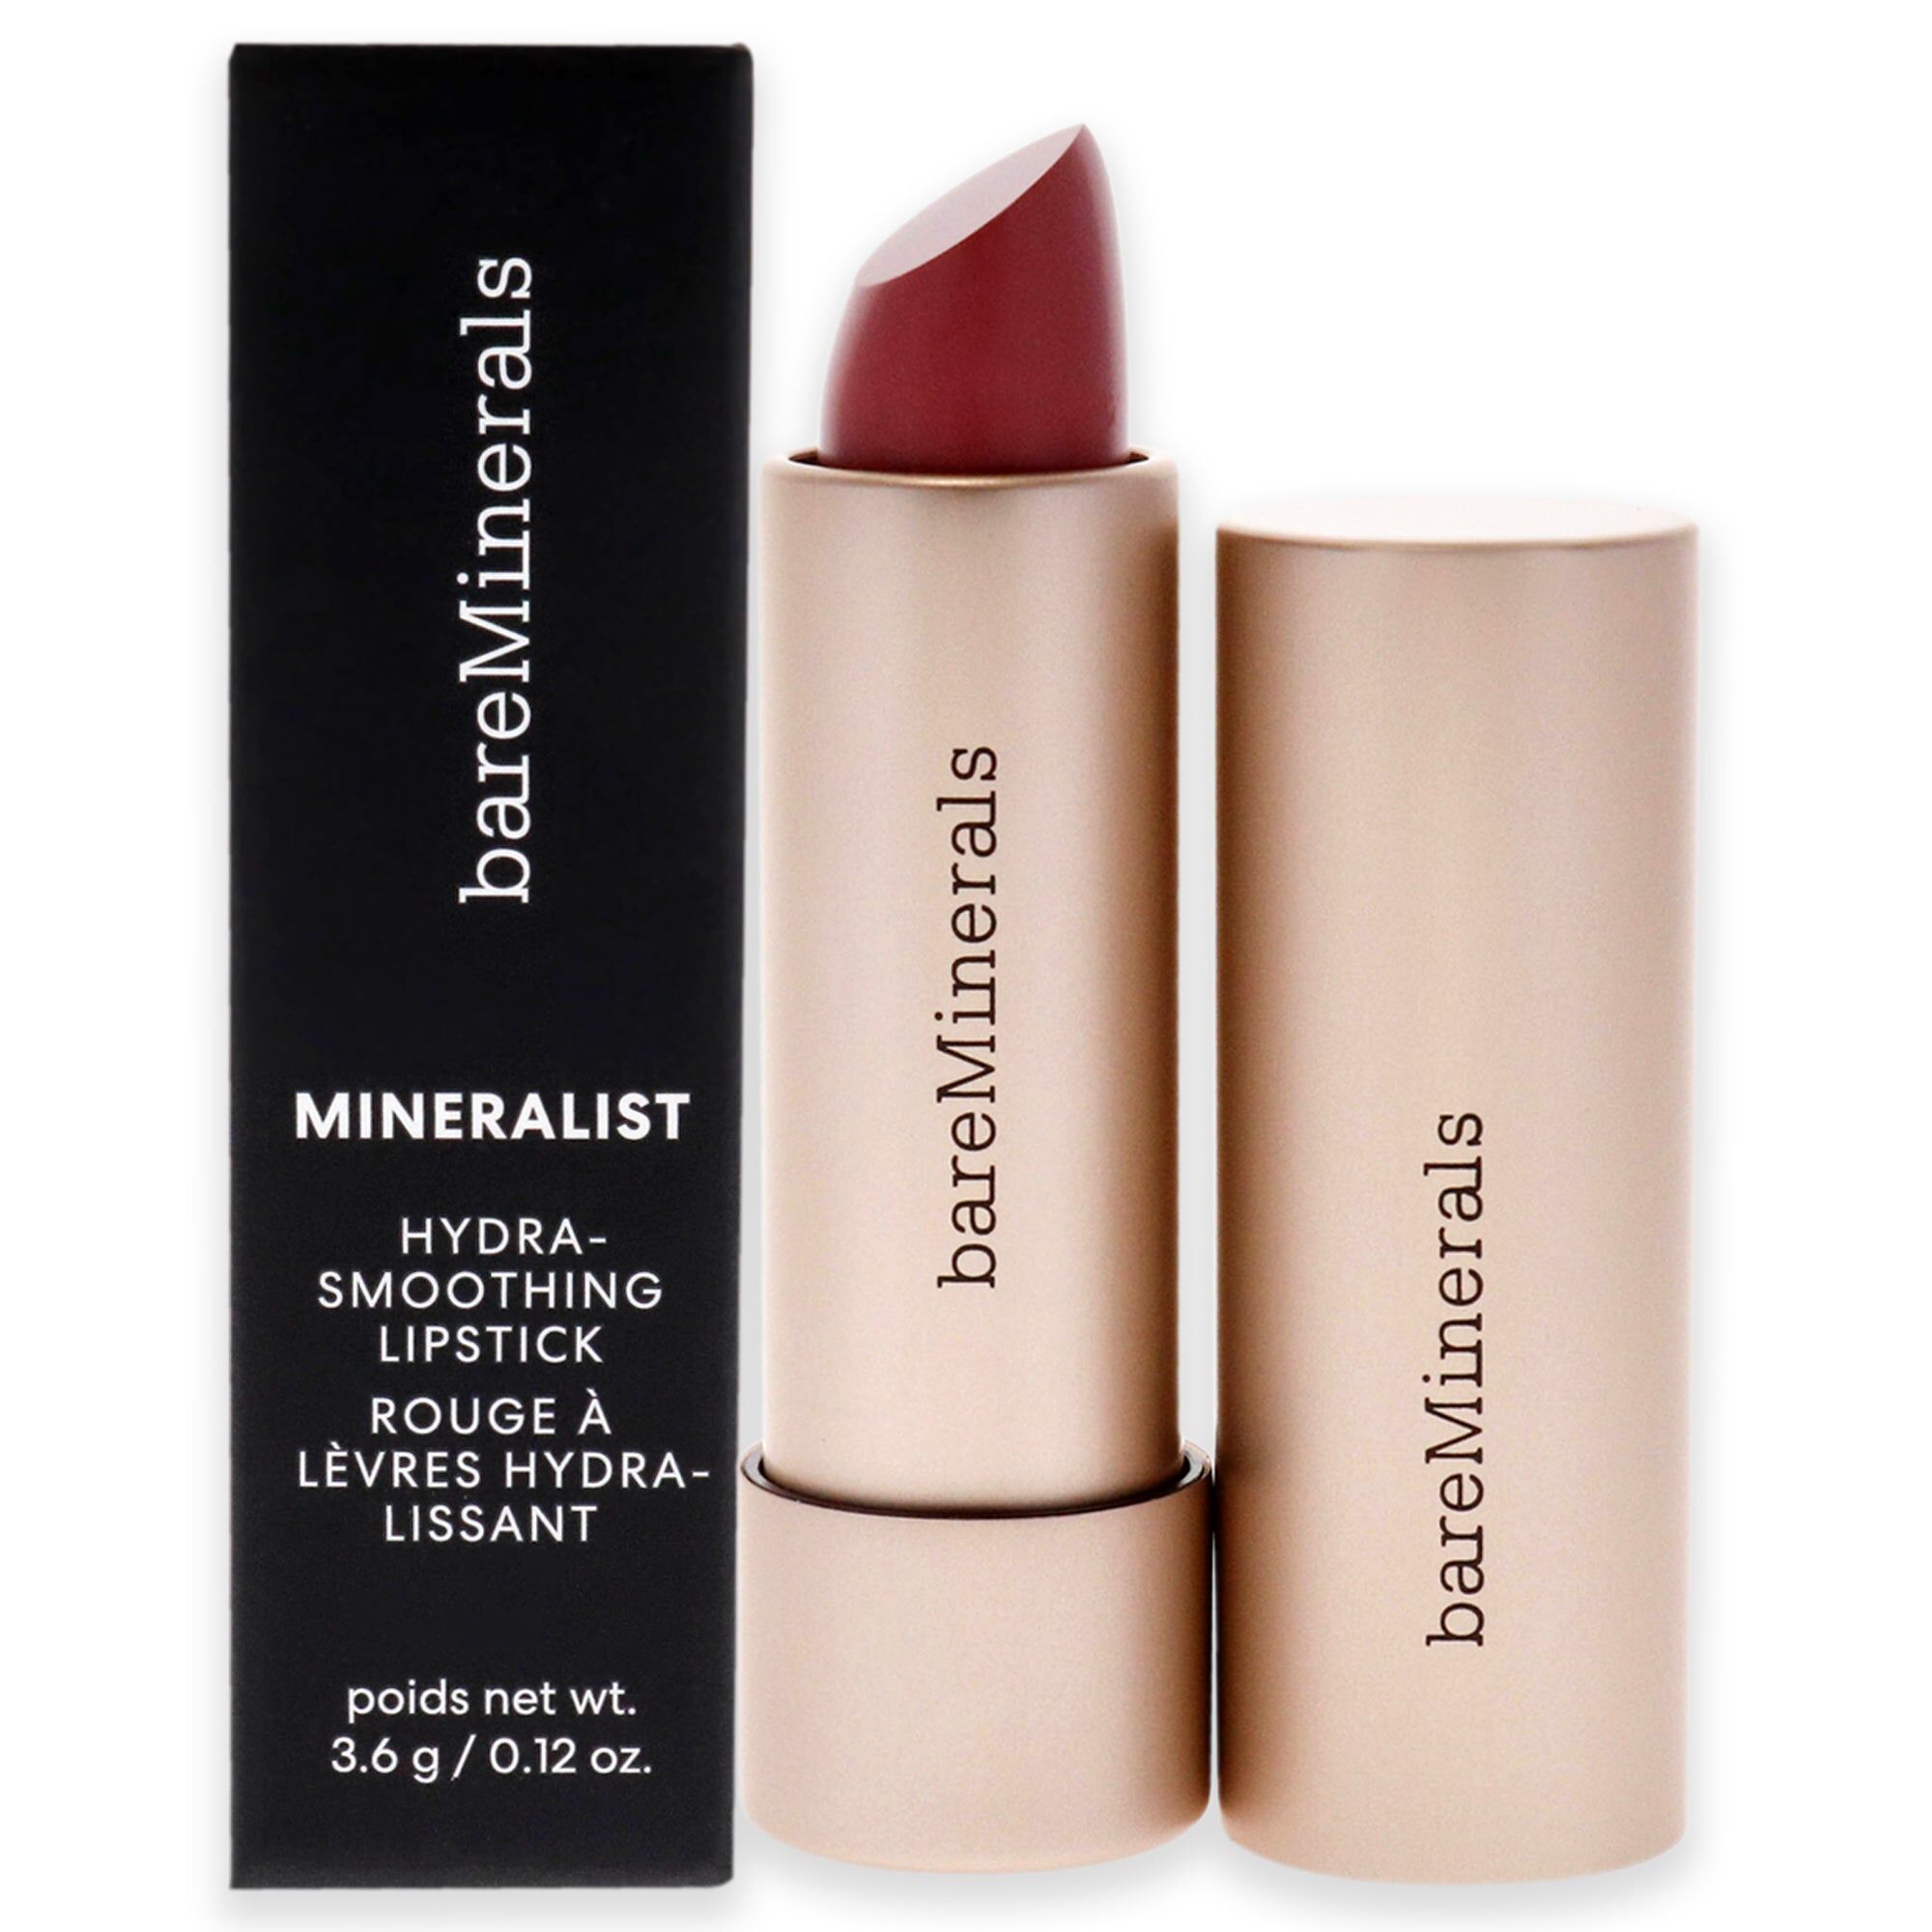 Mineralist Hydra-Smoothing Lipstick - Honesty by bareMinerals for Women - 0.12 oz Lipstick .1 oz